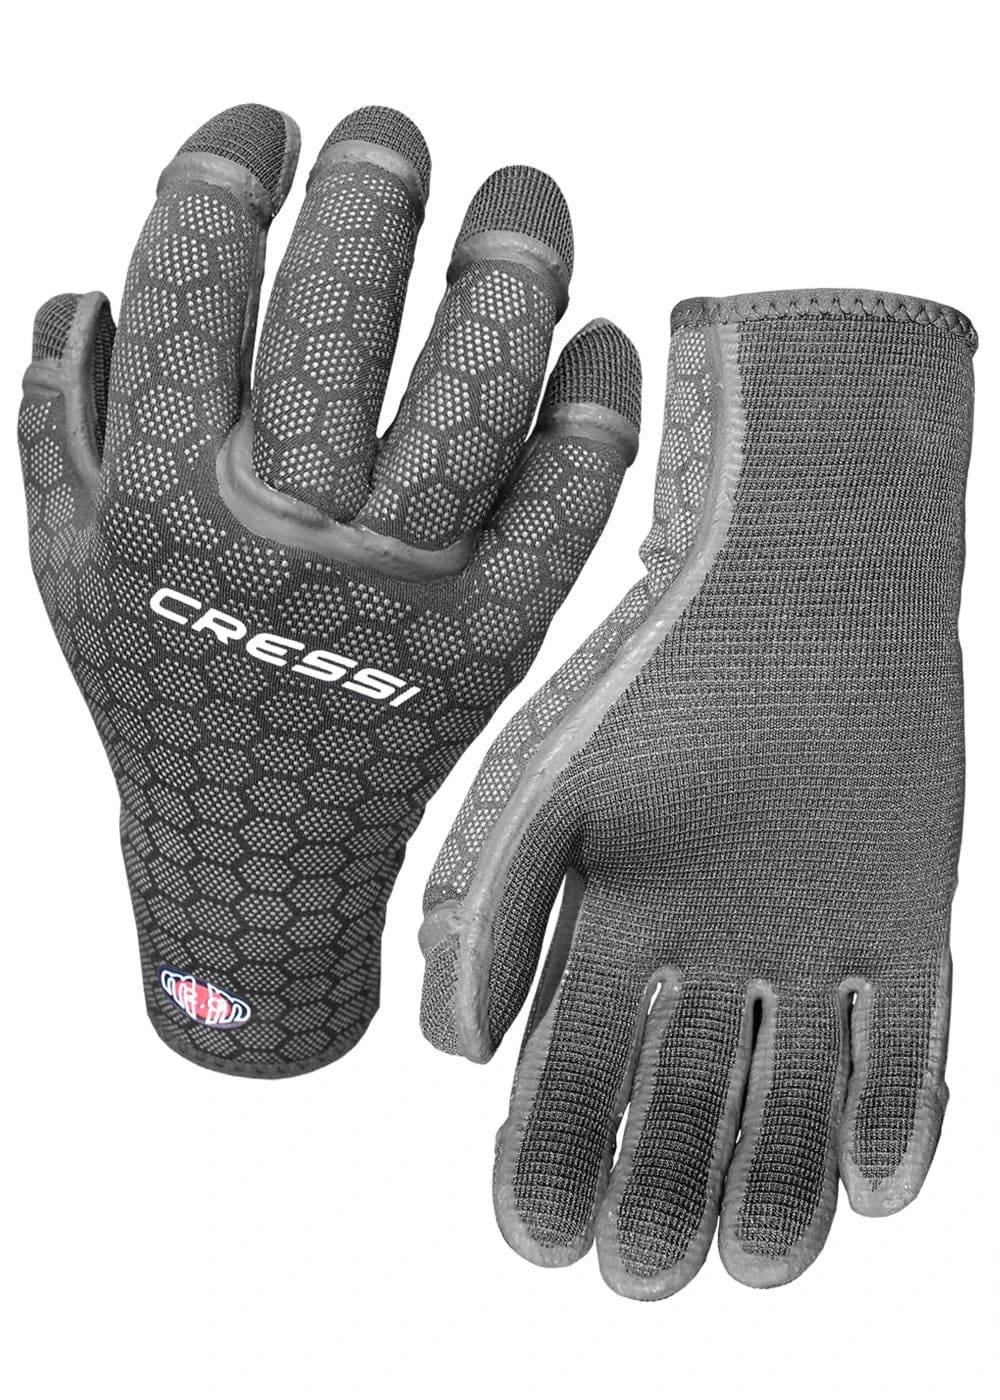 Cressi Spider Pro Gloves - Dive & Fish dive shop